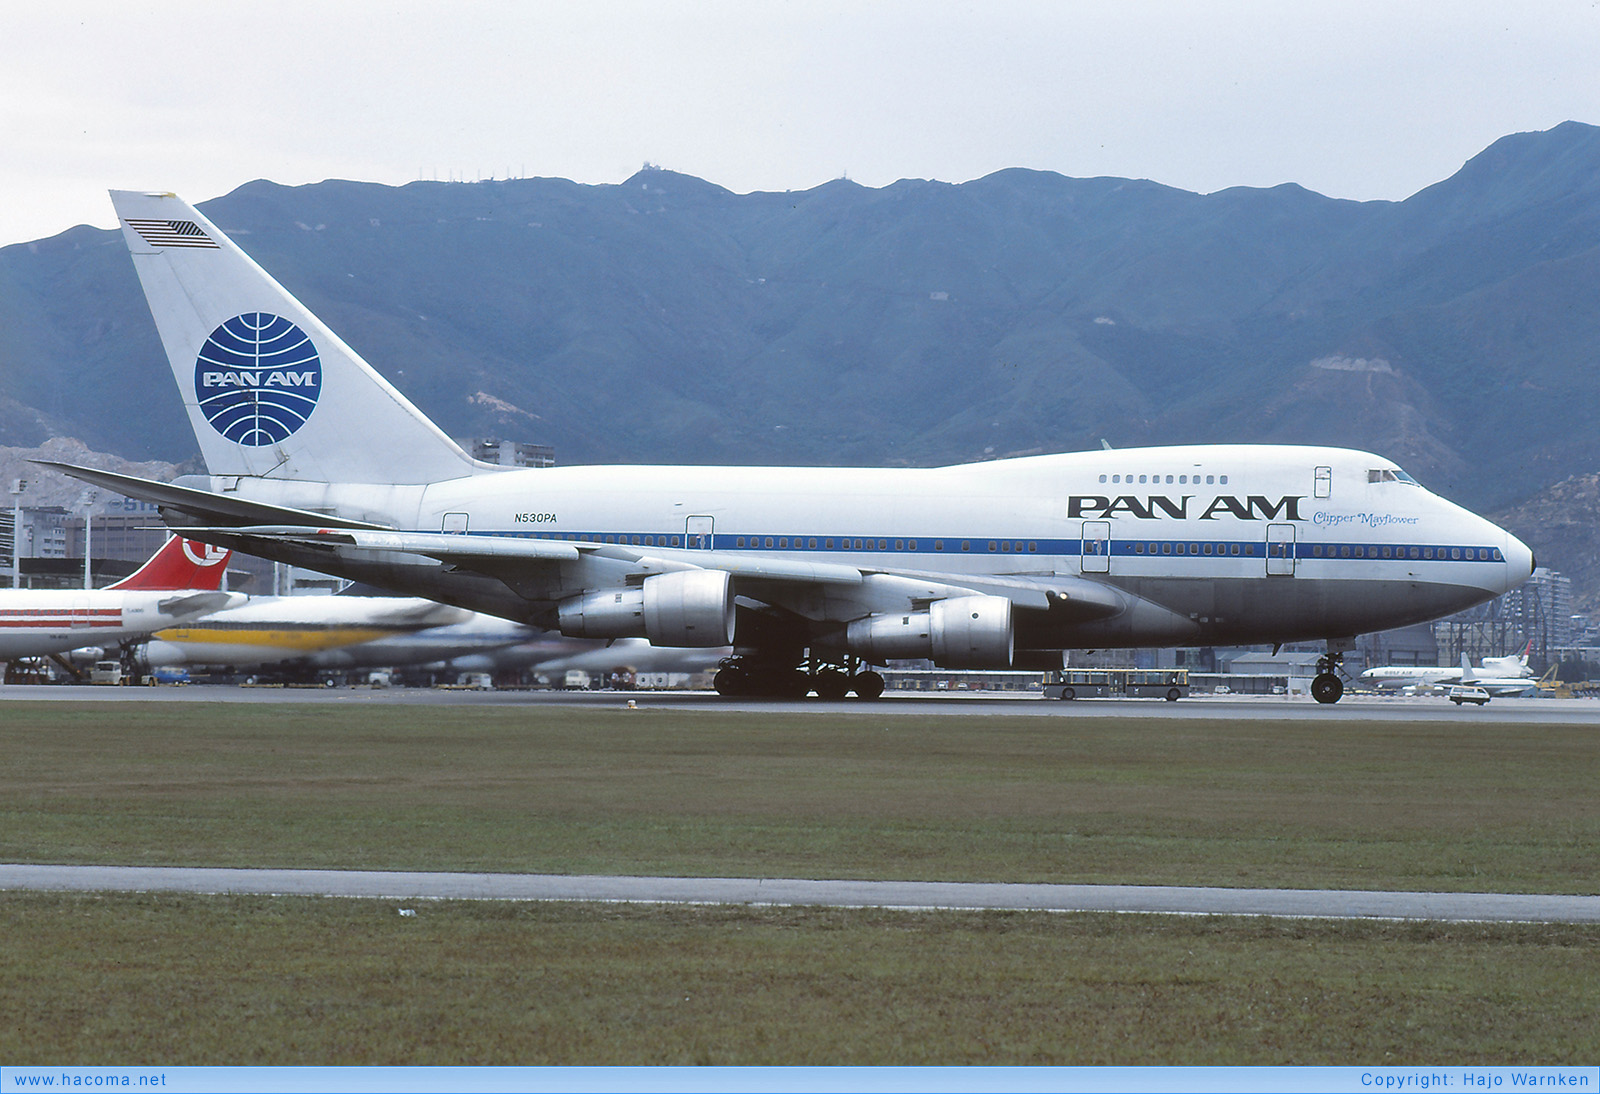 Photo of N530PA - Pan Am Clipper Mayflower - Kai Tak Airport - Apr 16, 1980